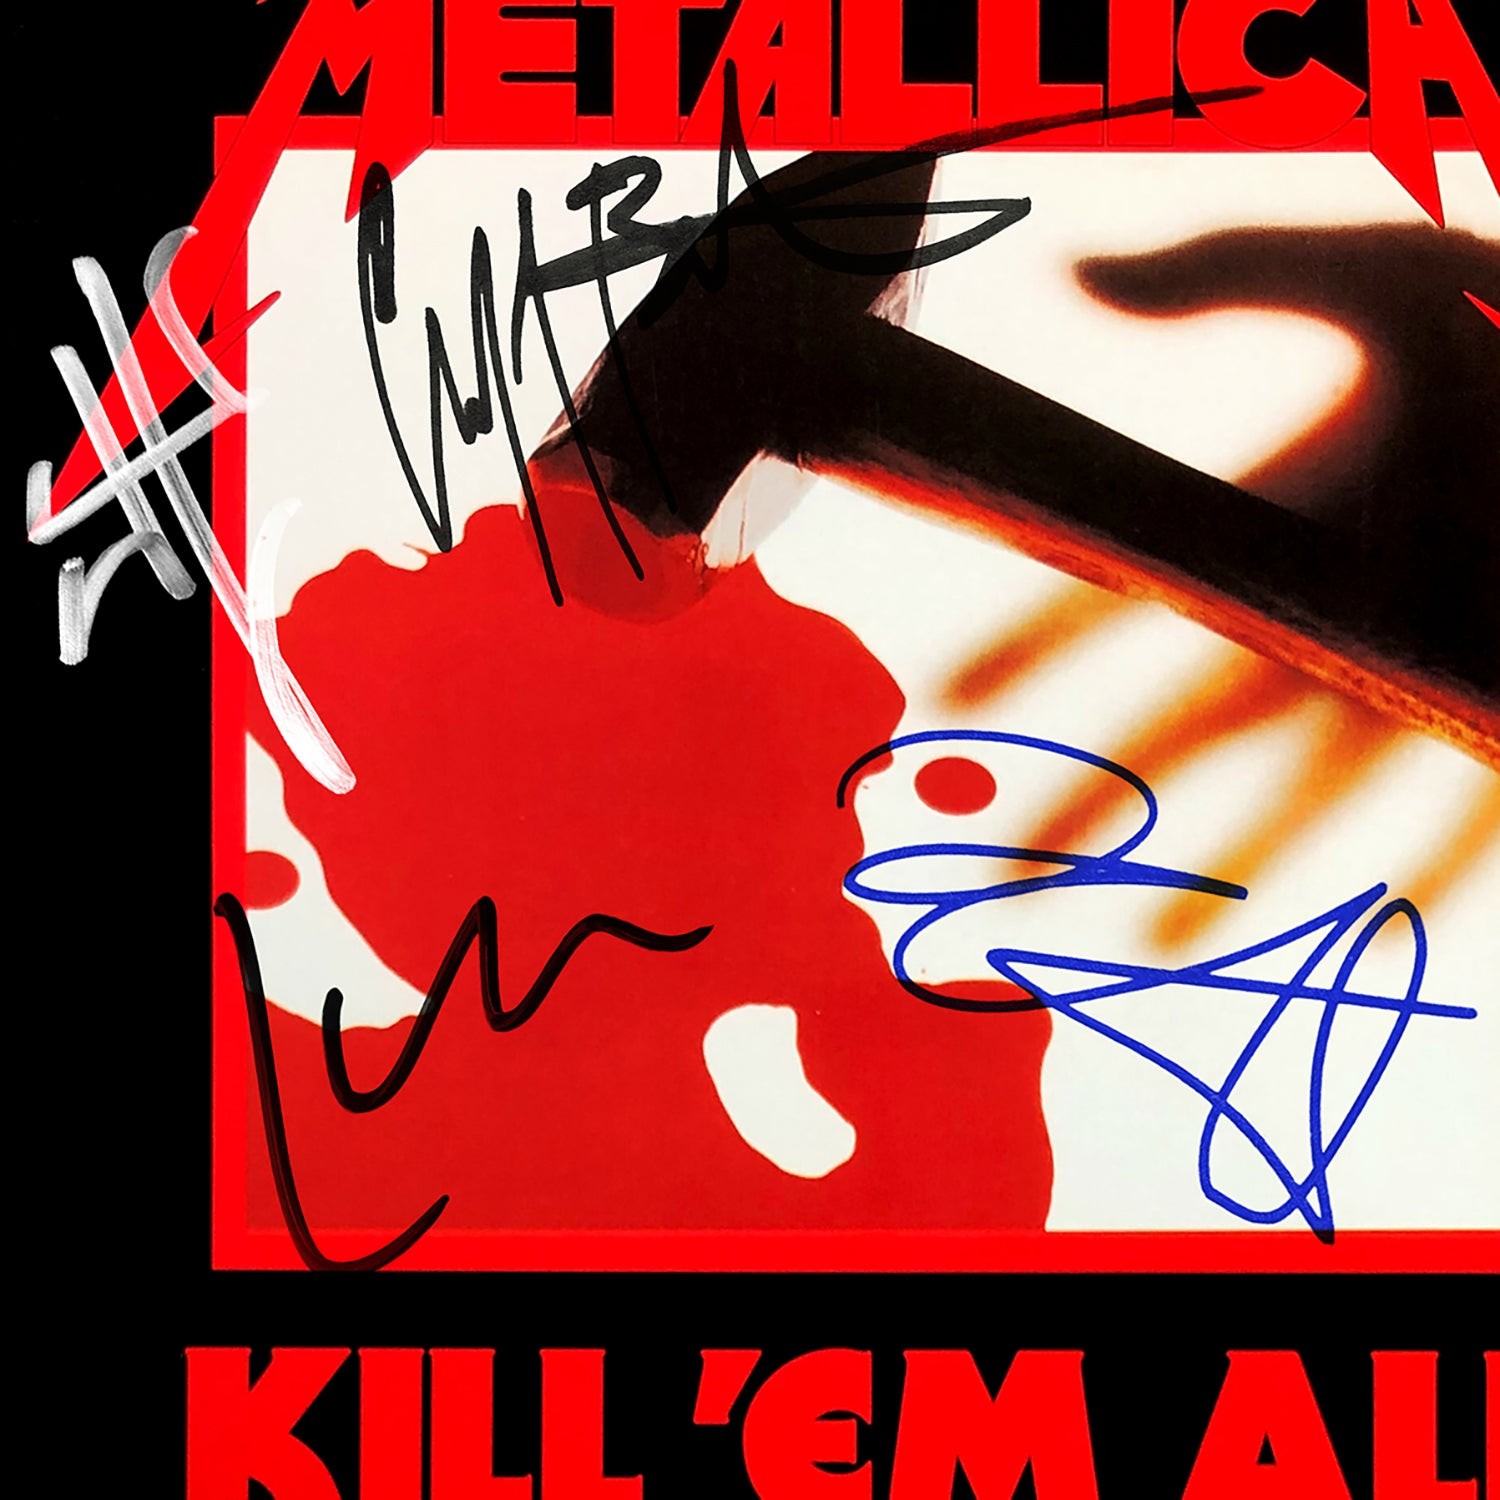 Metallica – Kill Em All Framed Gold LP Record Display C3 - Gold